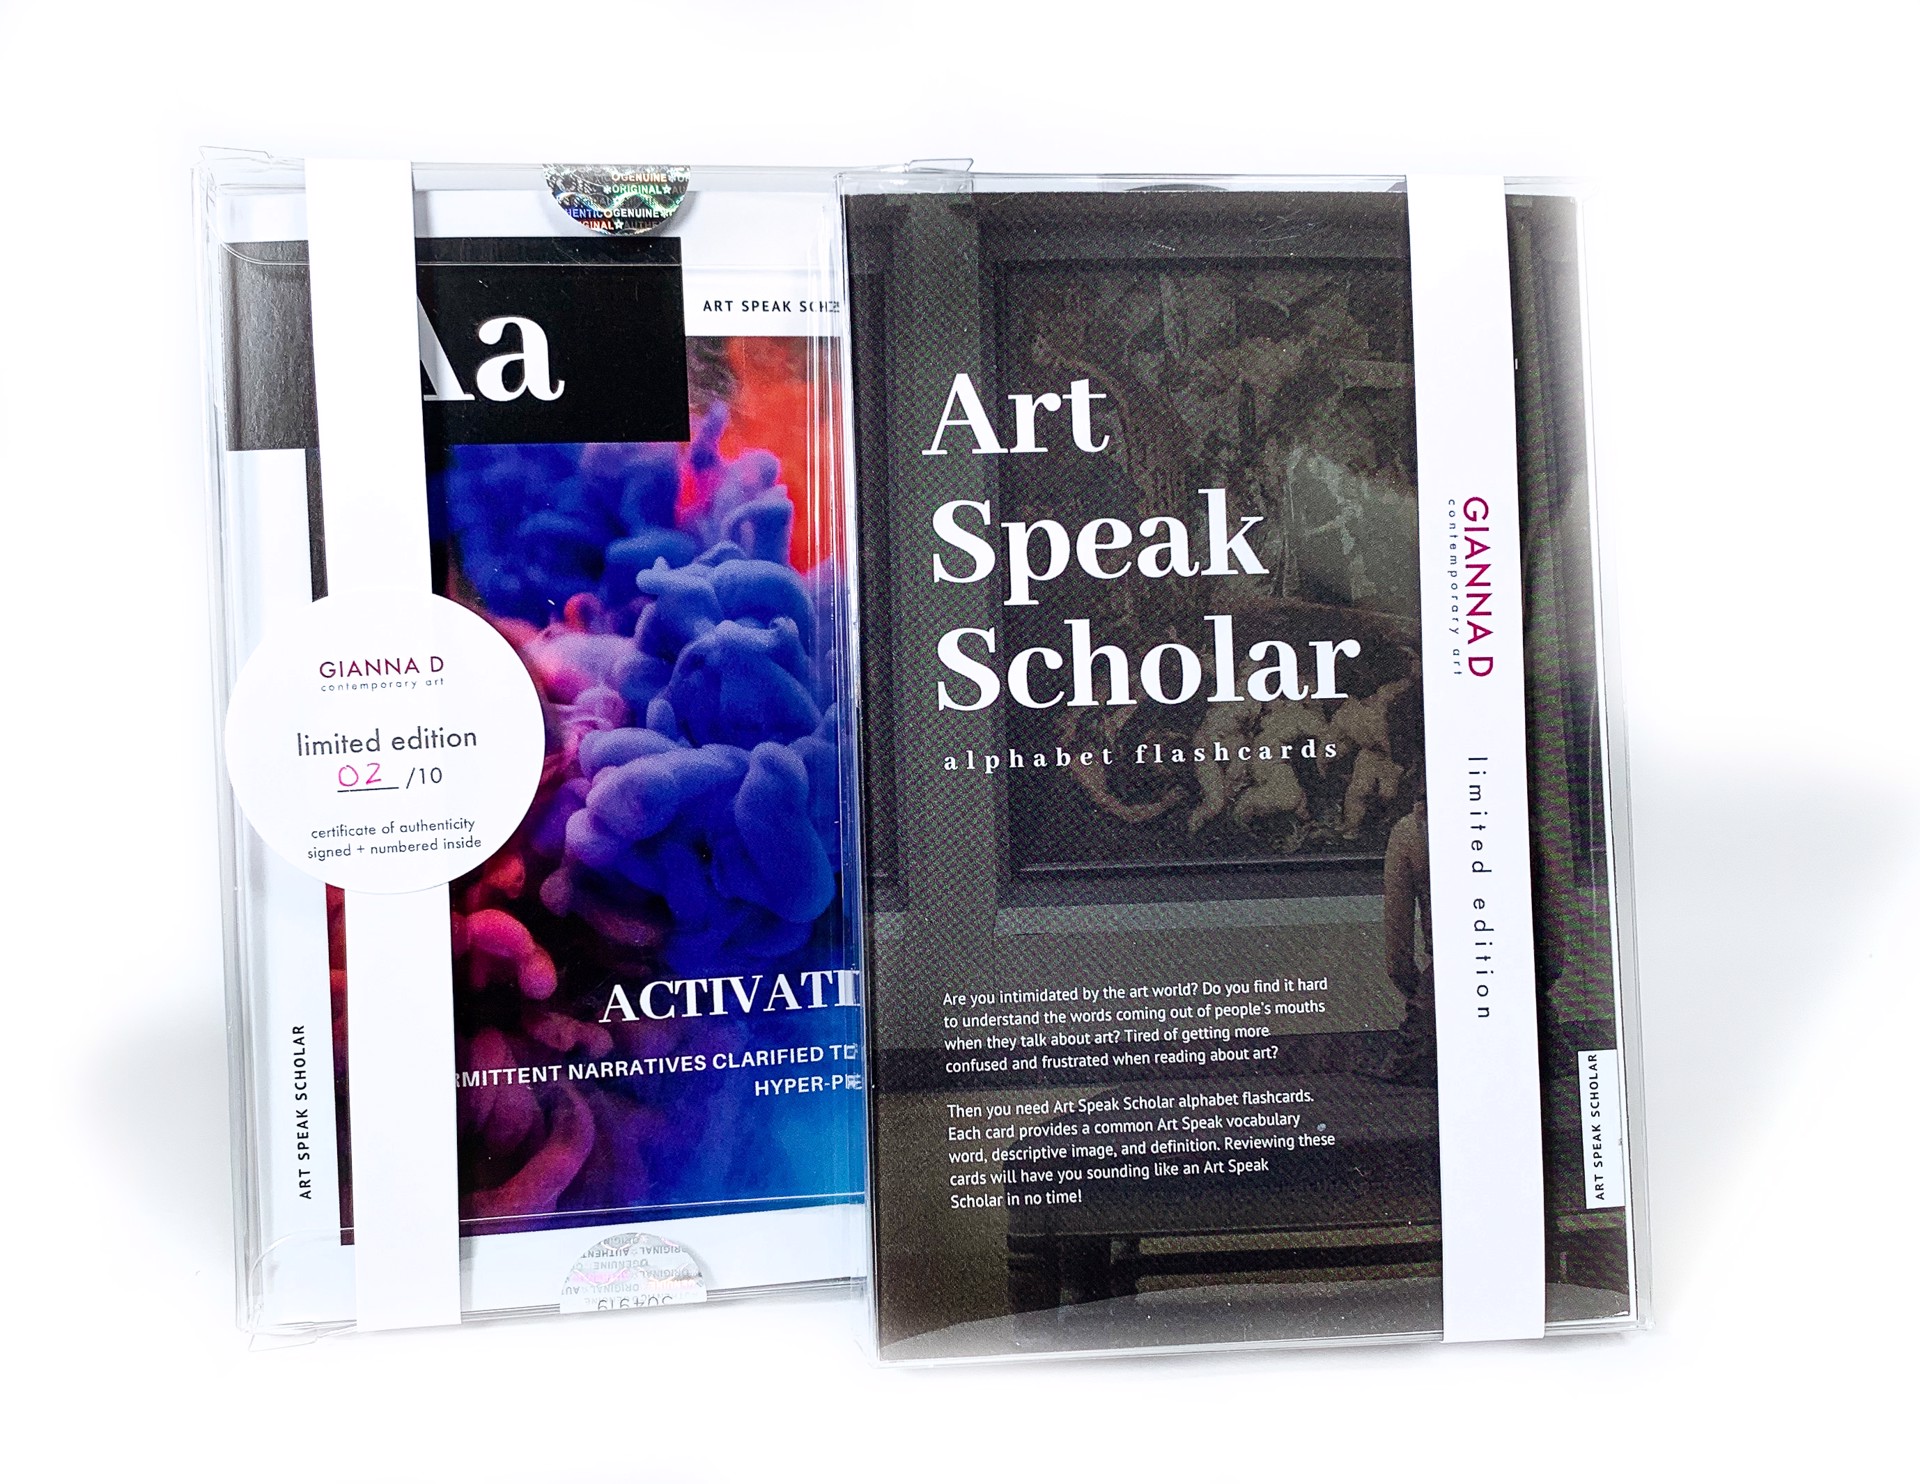 Art Speak Scholar Alphabet Flashcards by Gianna DiBartolomeo